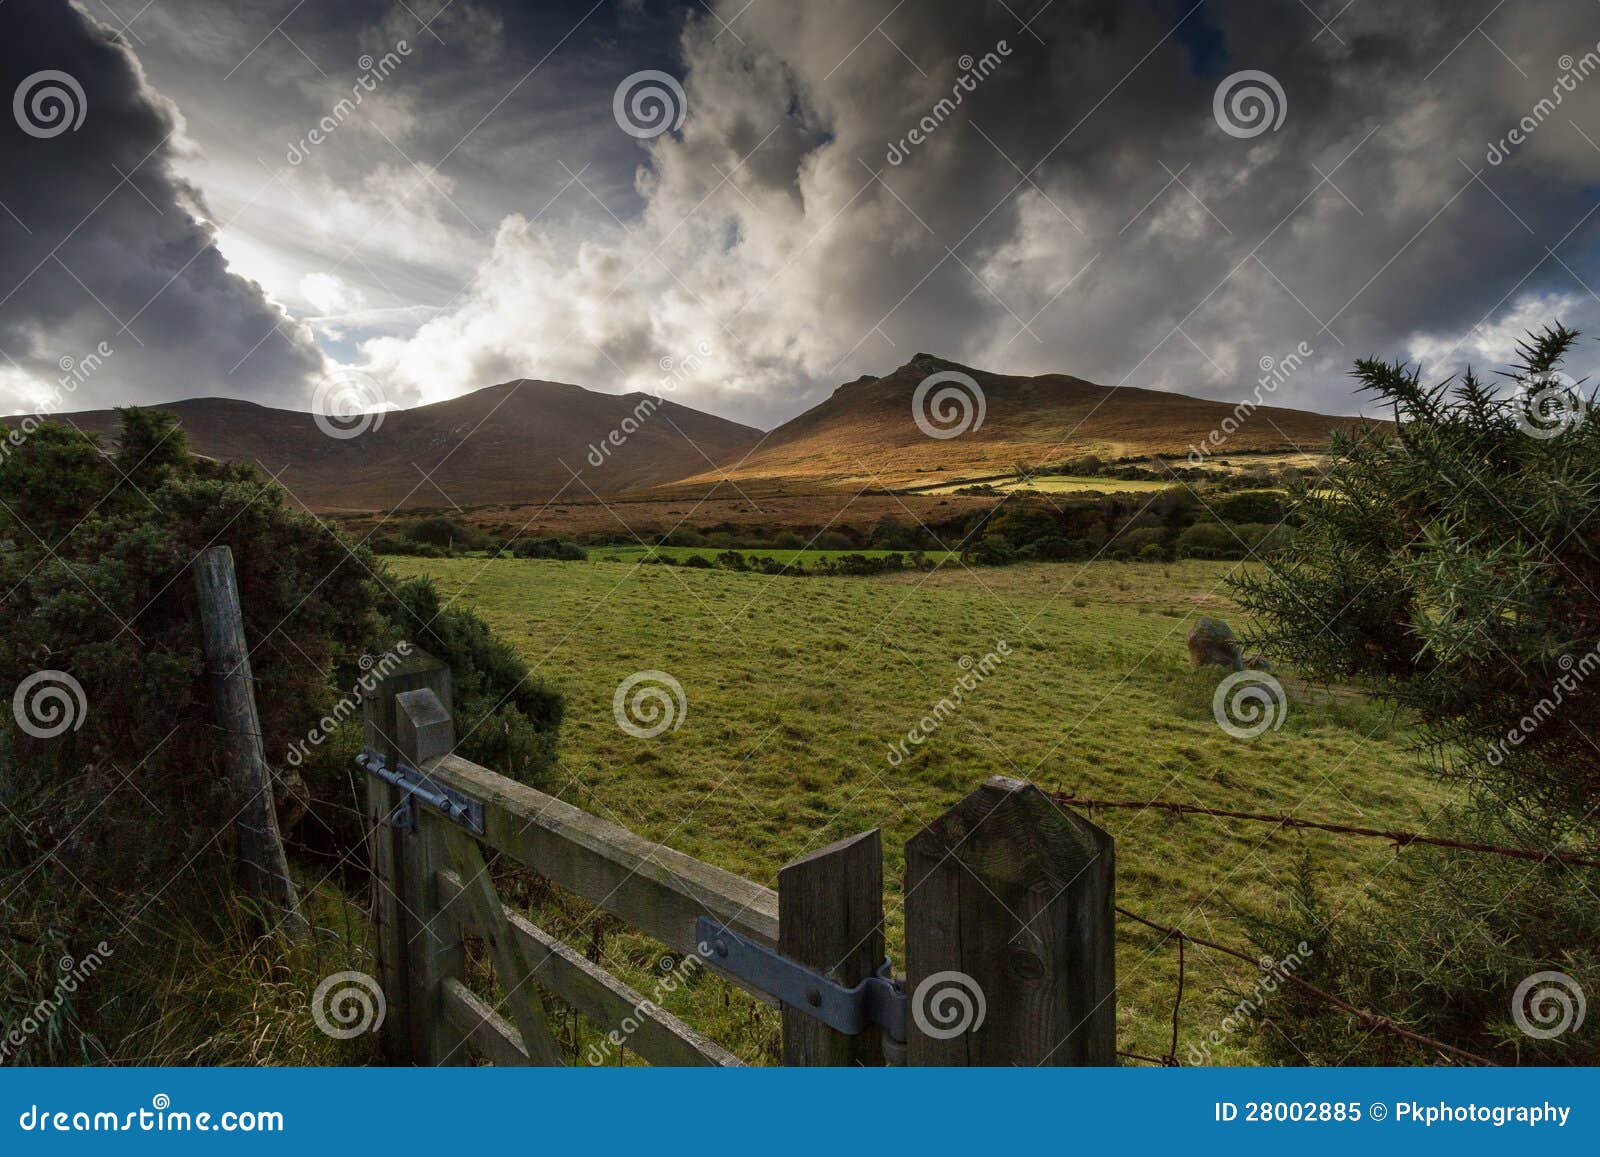 mourne mountains, northern ireland